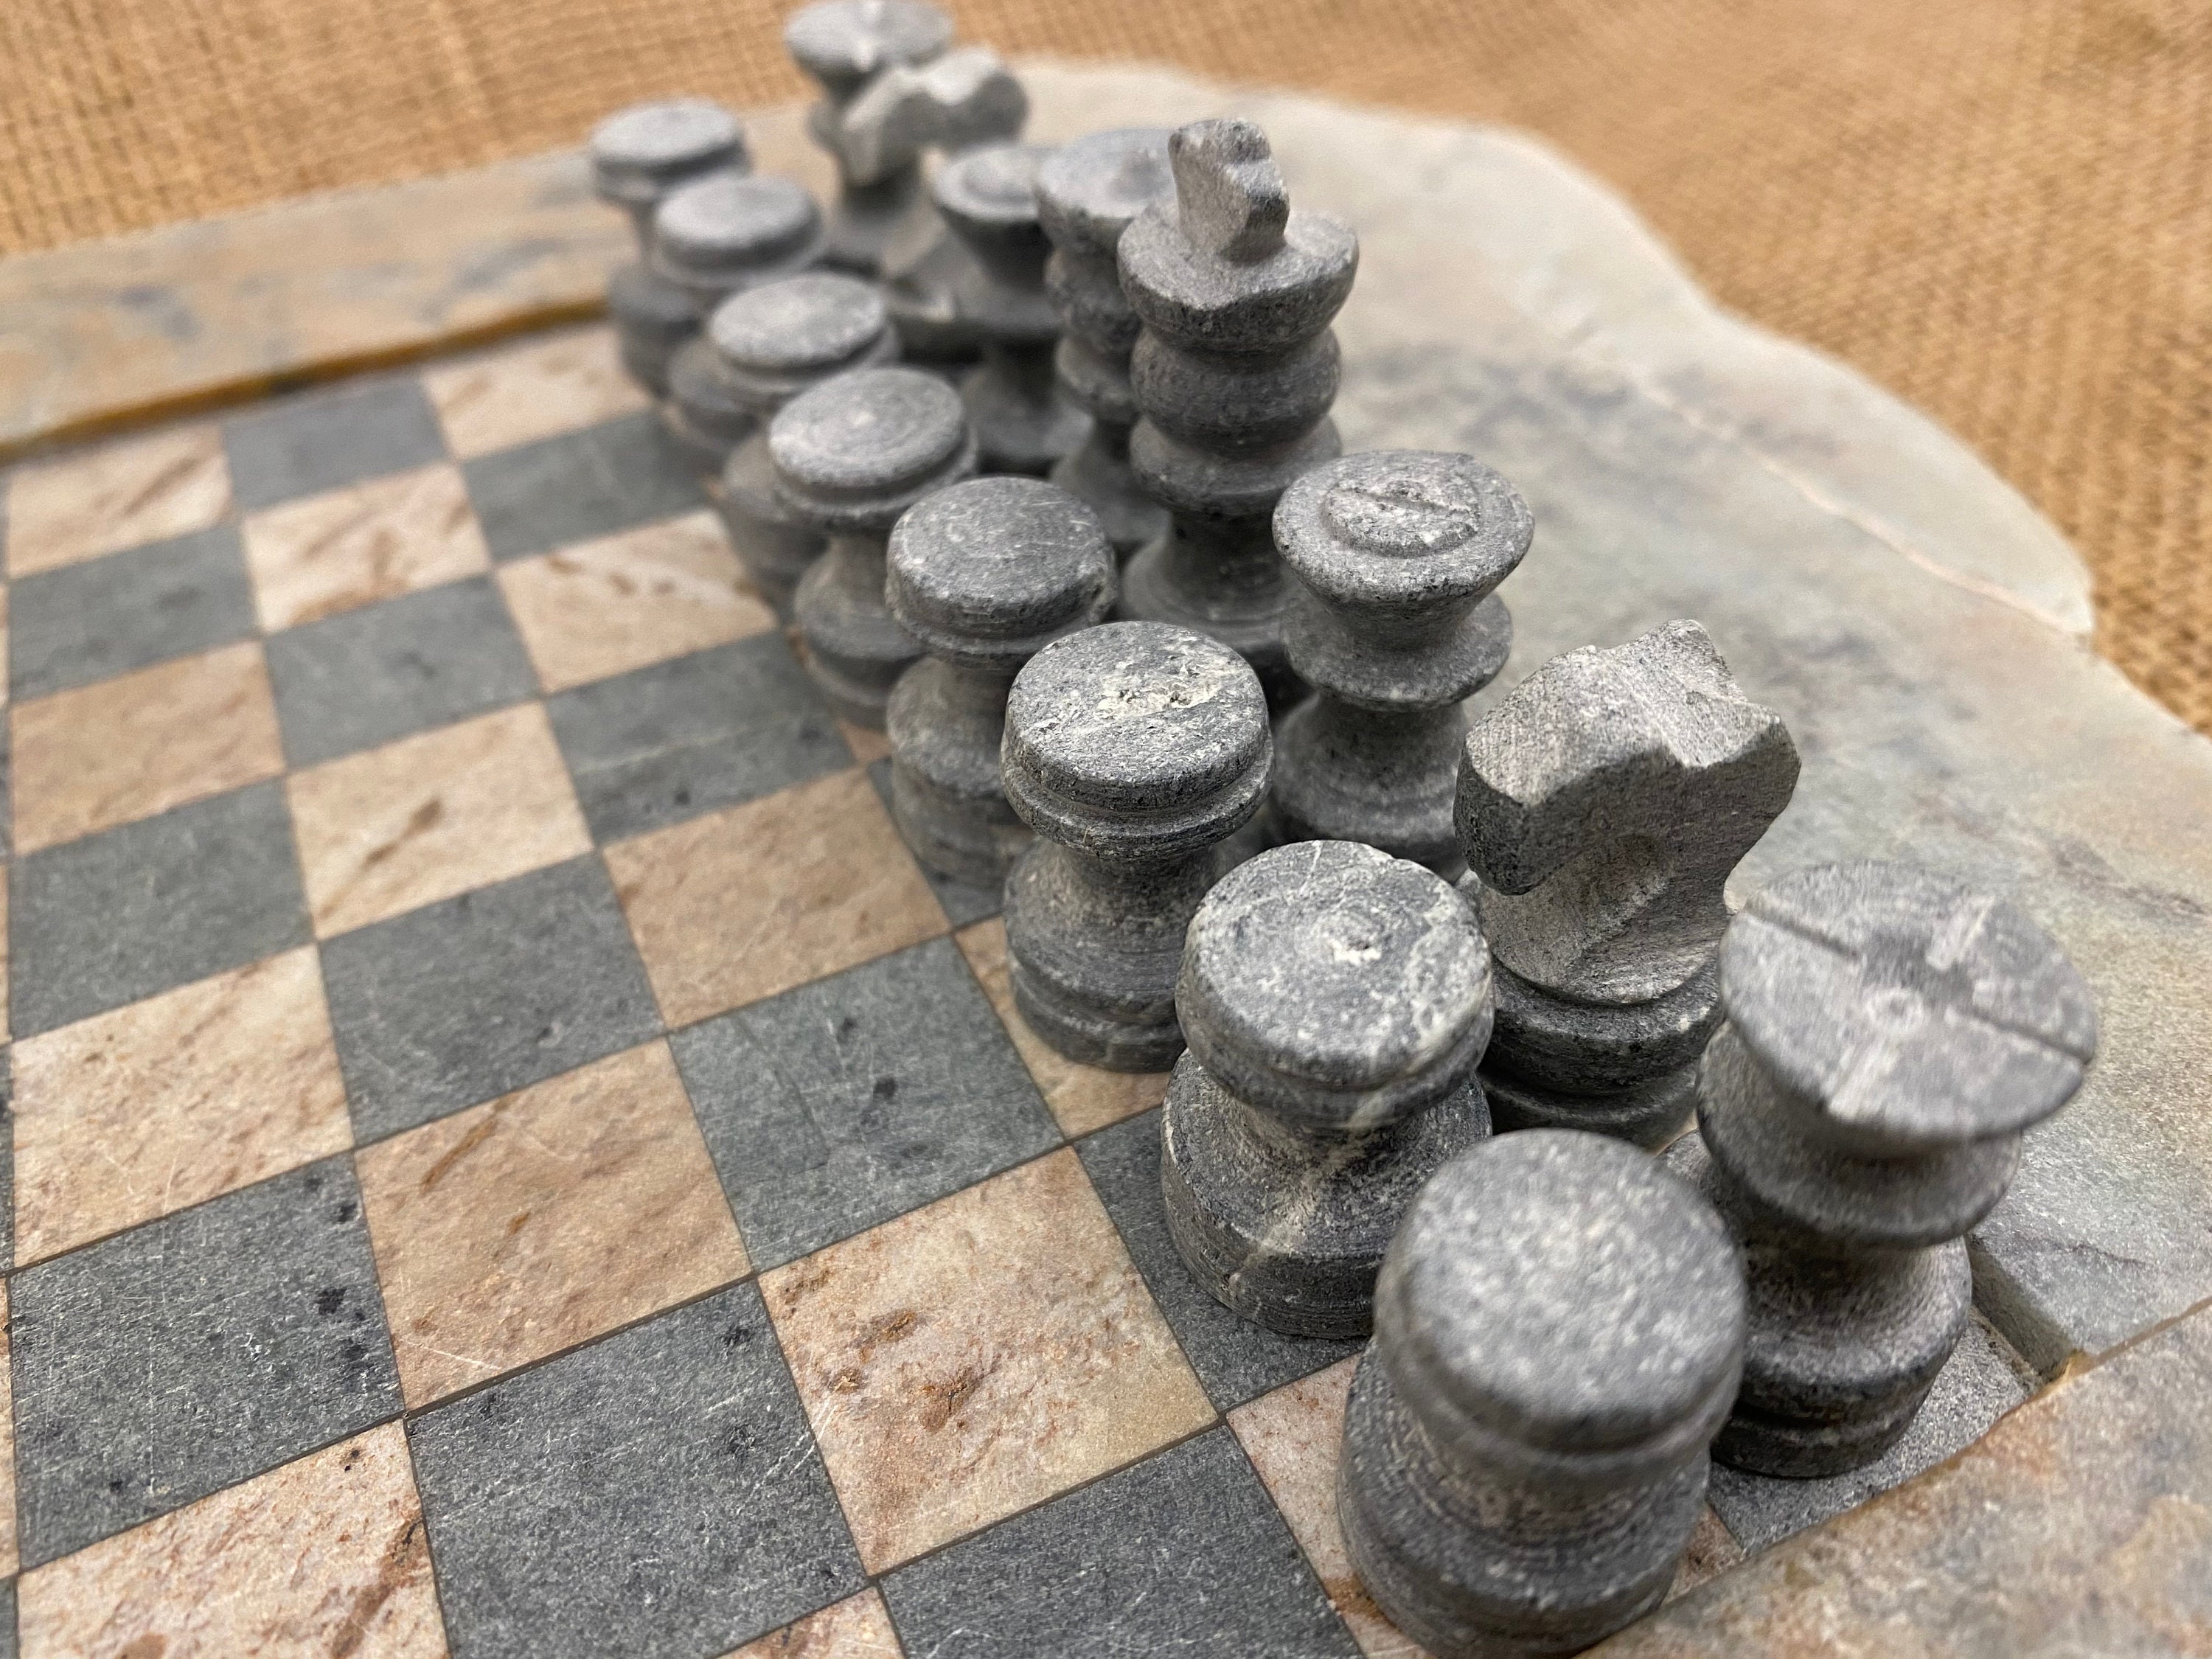 Chess Sets for sale in João Pessoa, Brazil, Facebook Marketplace